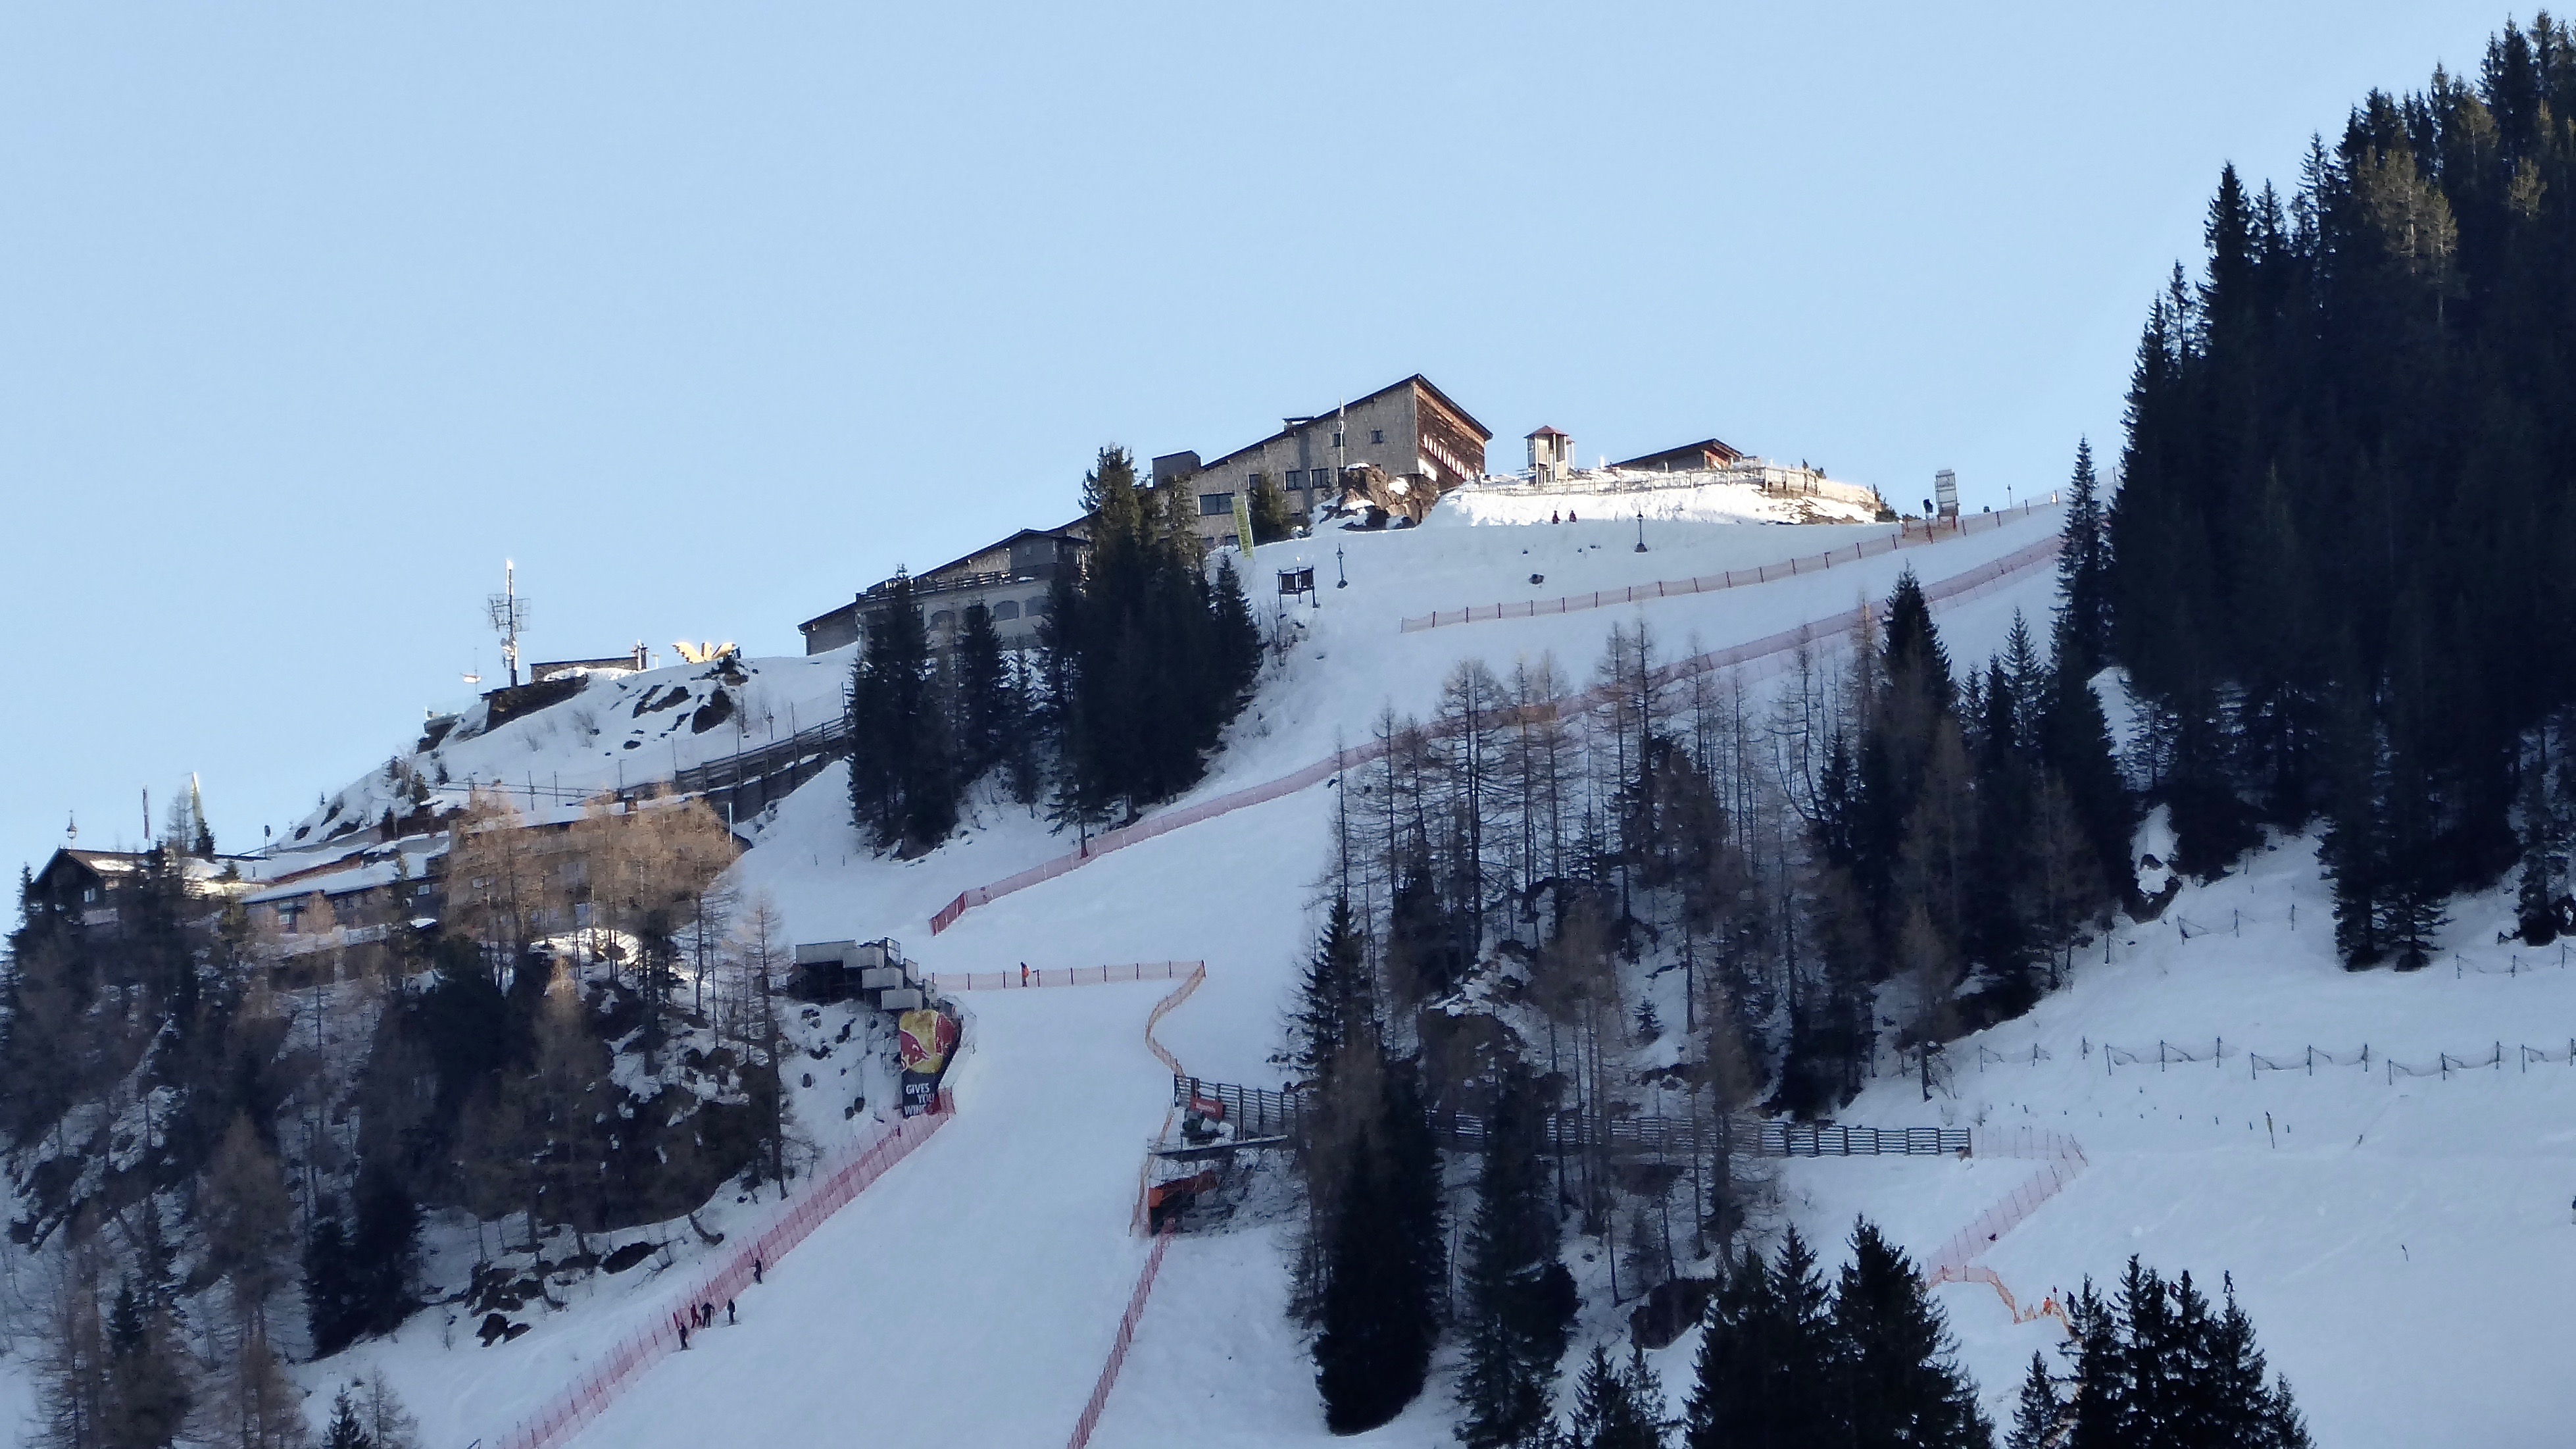 Hahnenkamm ski race, Kitzbühel